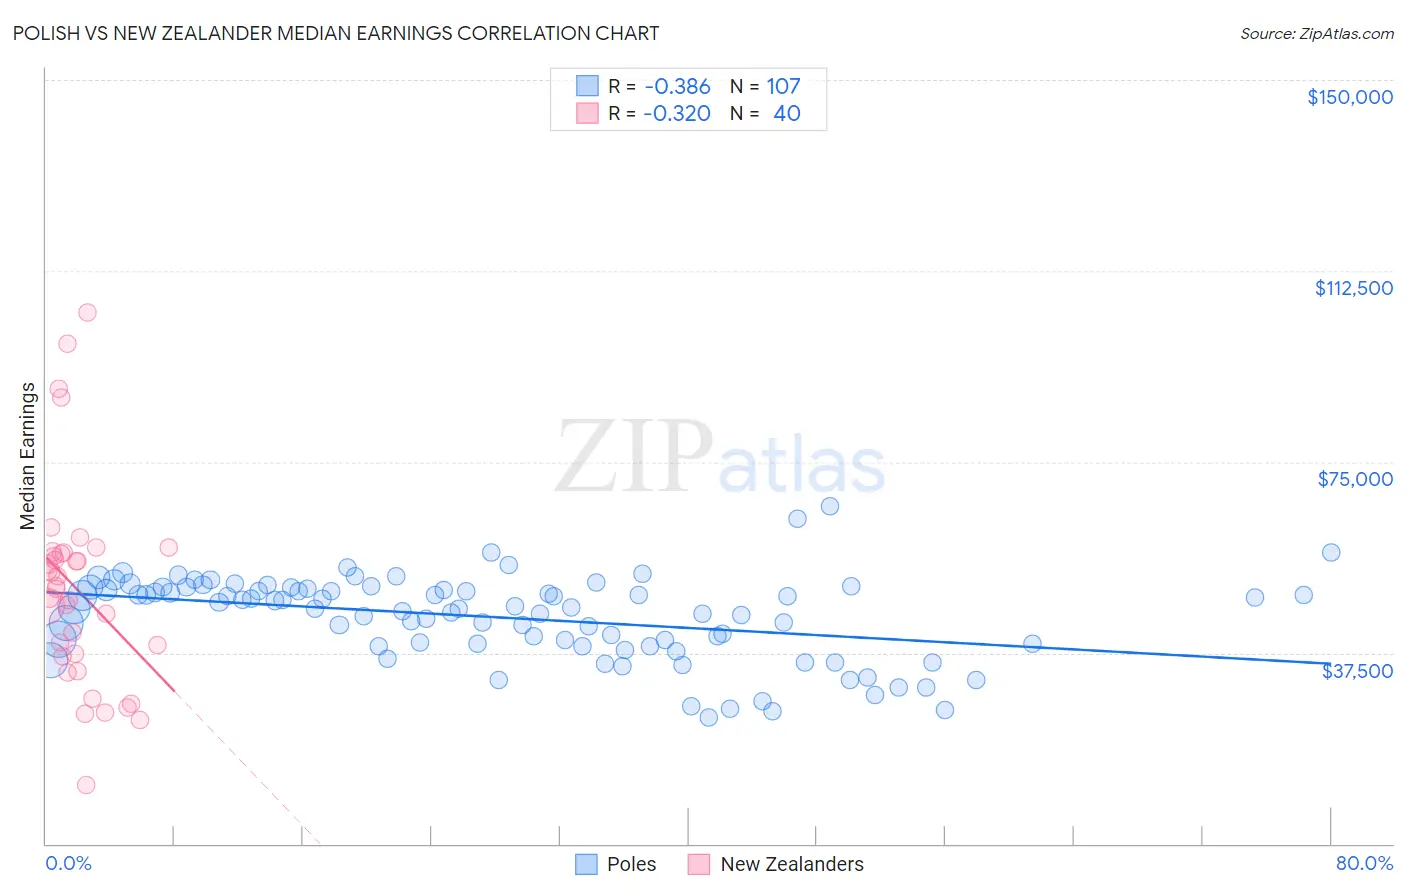 Polish vs New Zealander Median Earnings